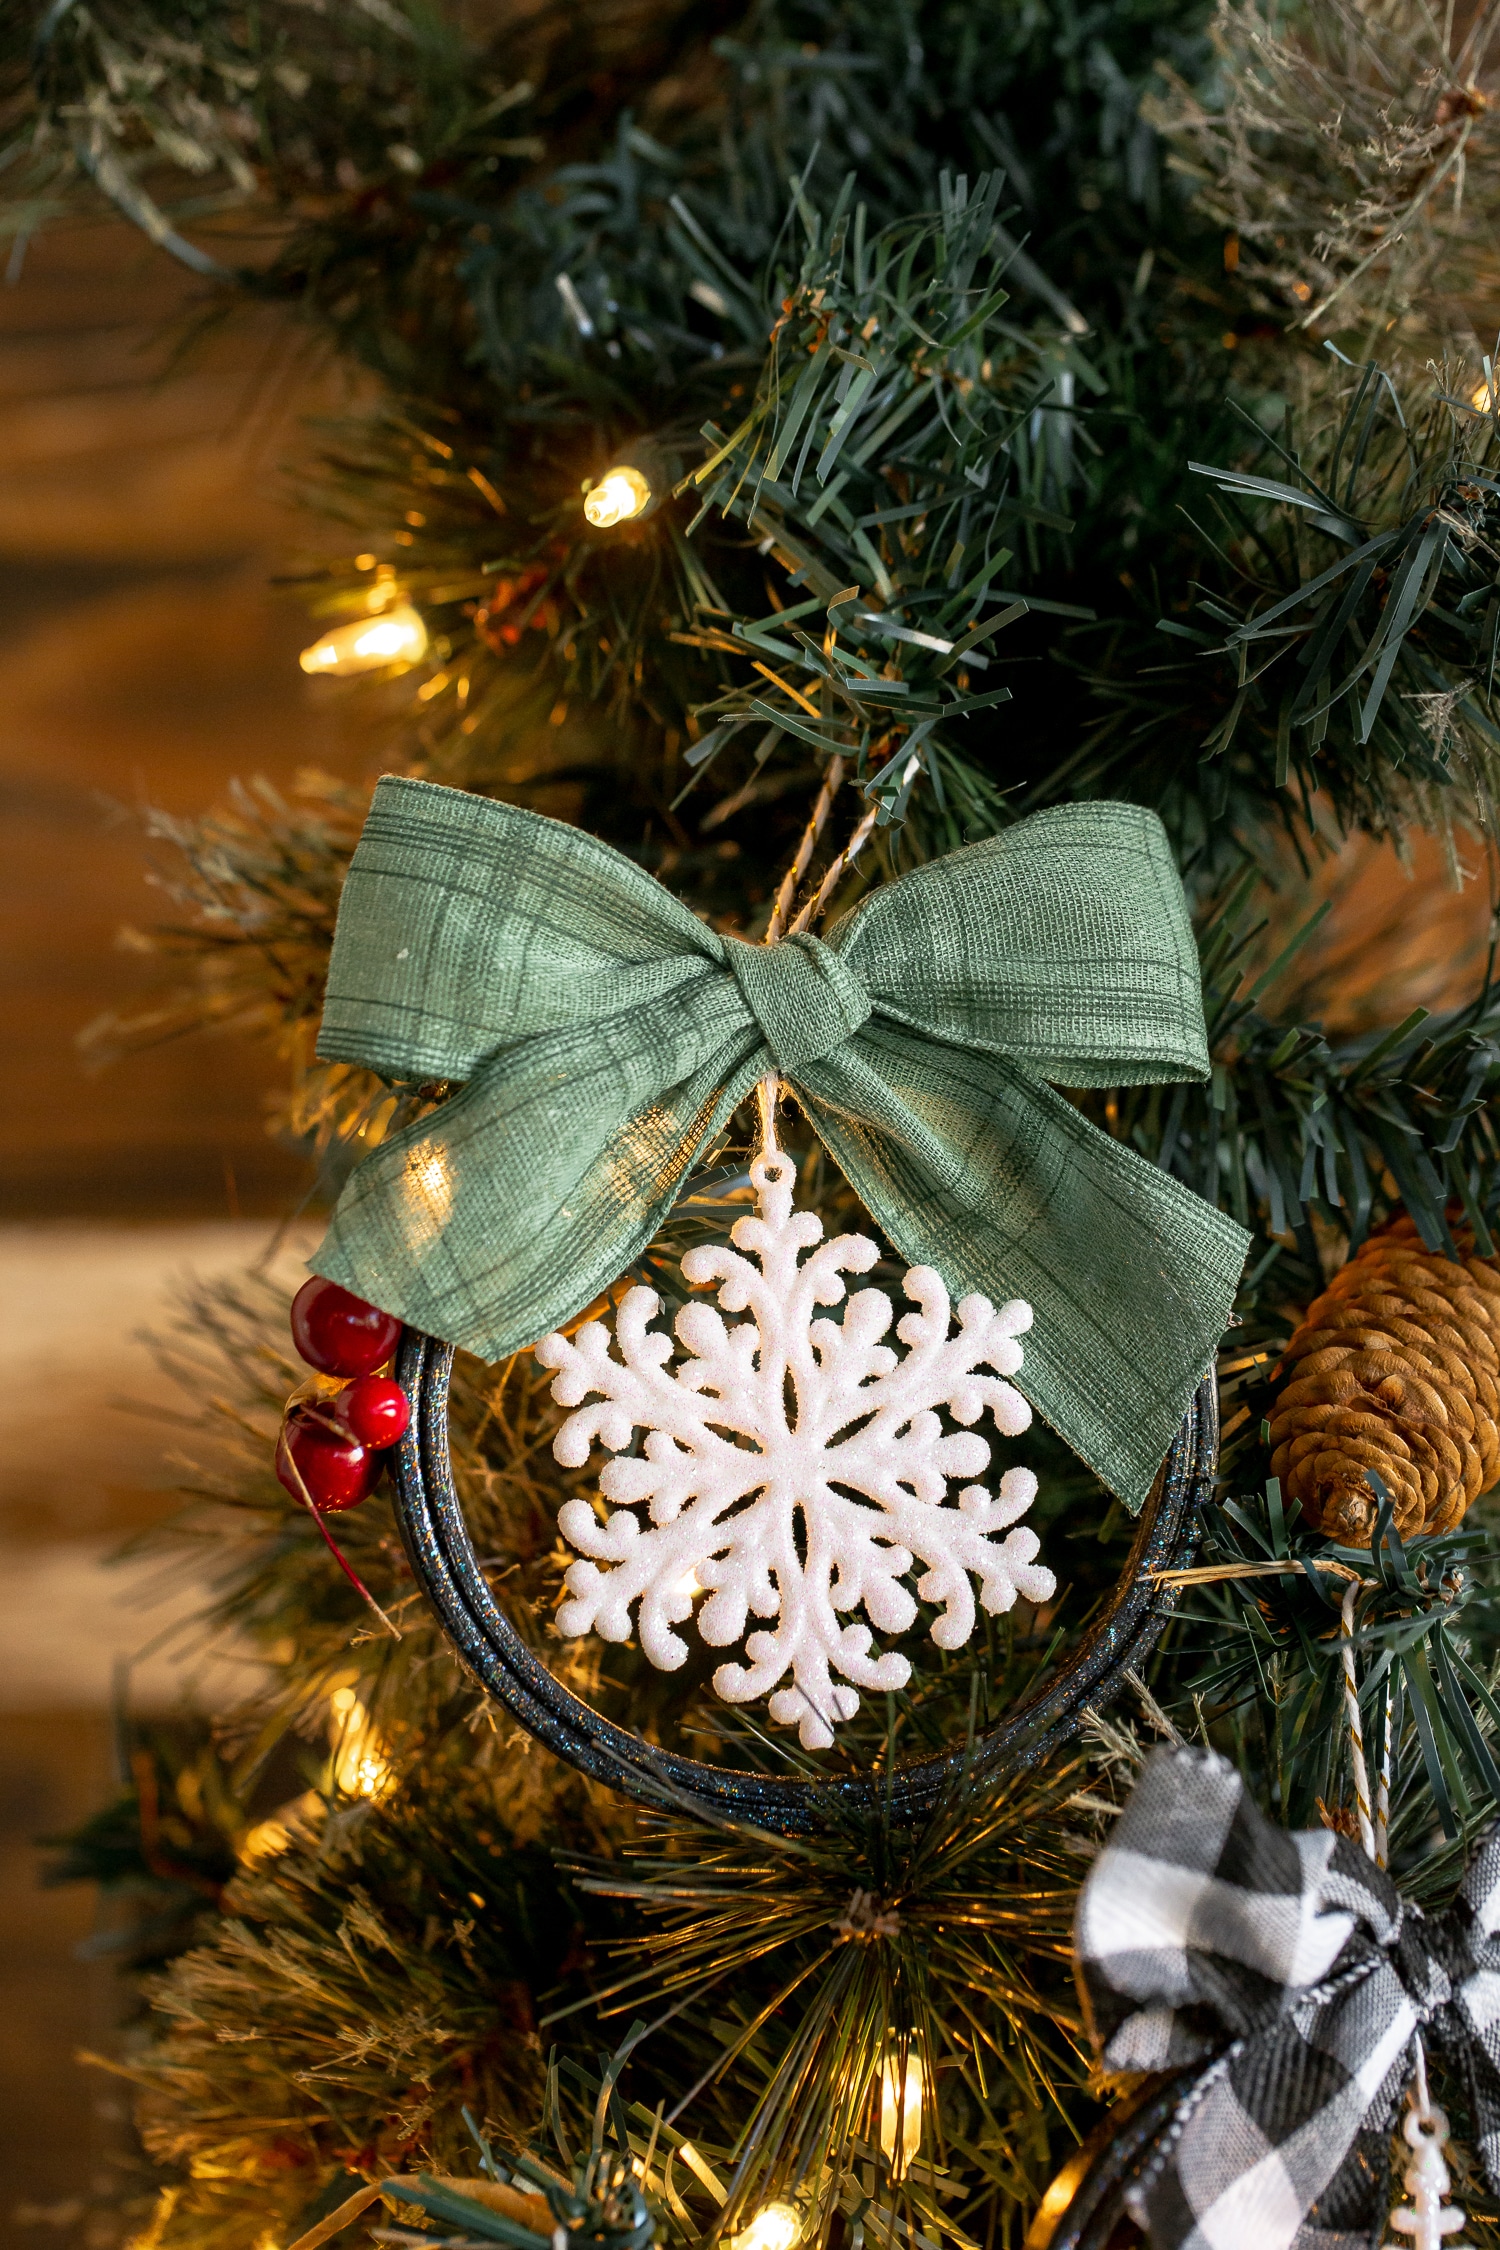 snowflake ornaments in embroidery hoop